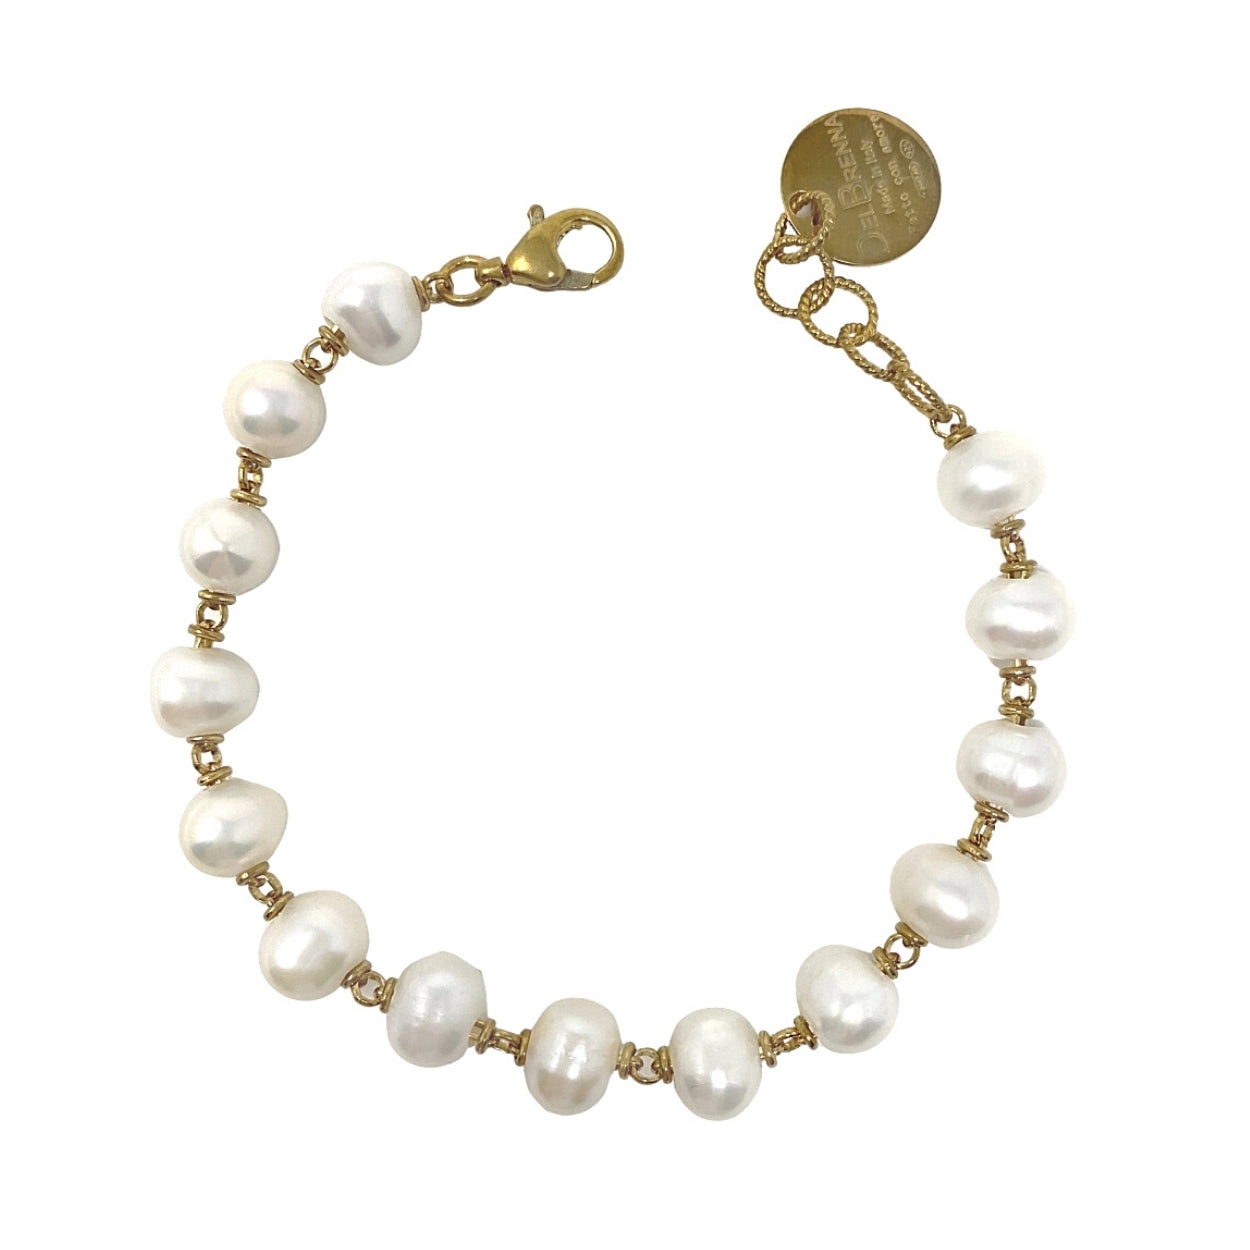 Cute pearl bracelet